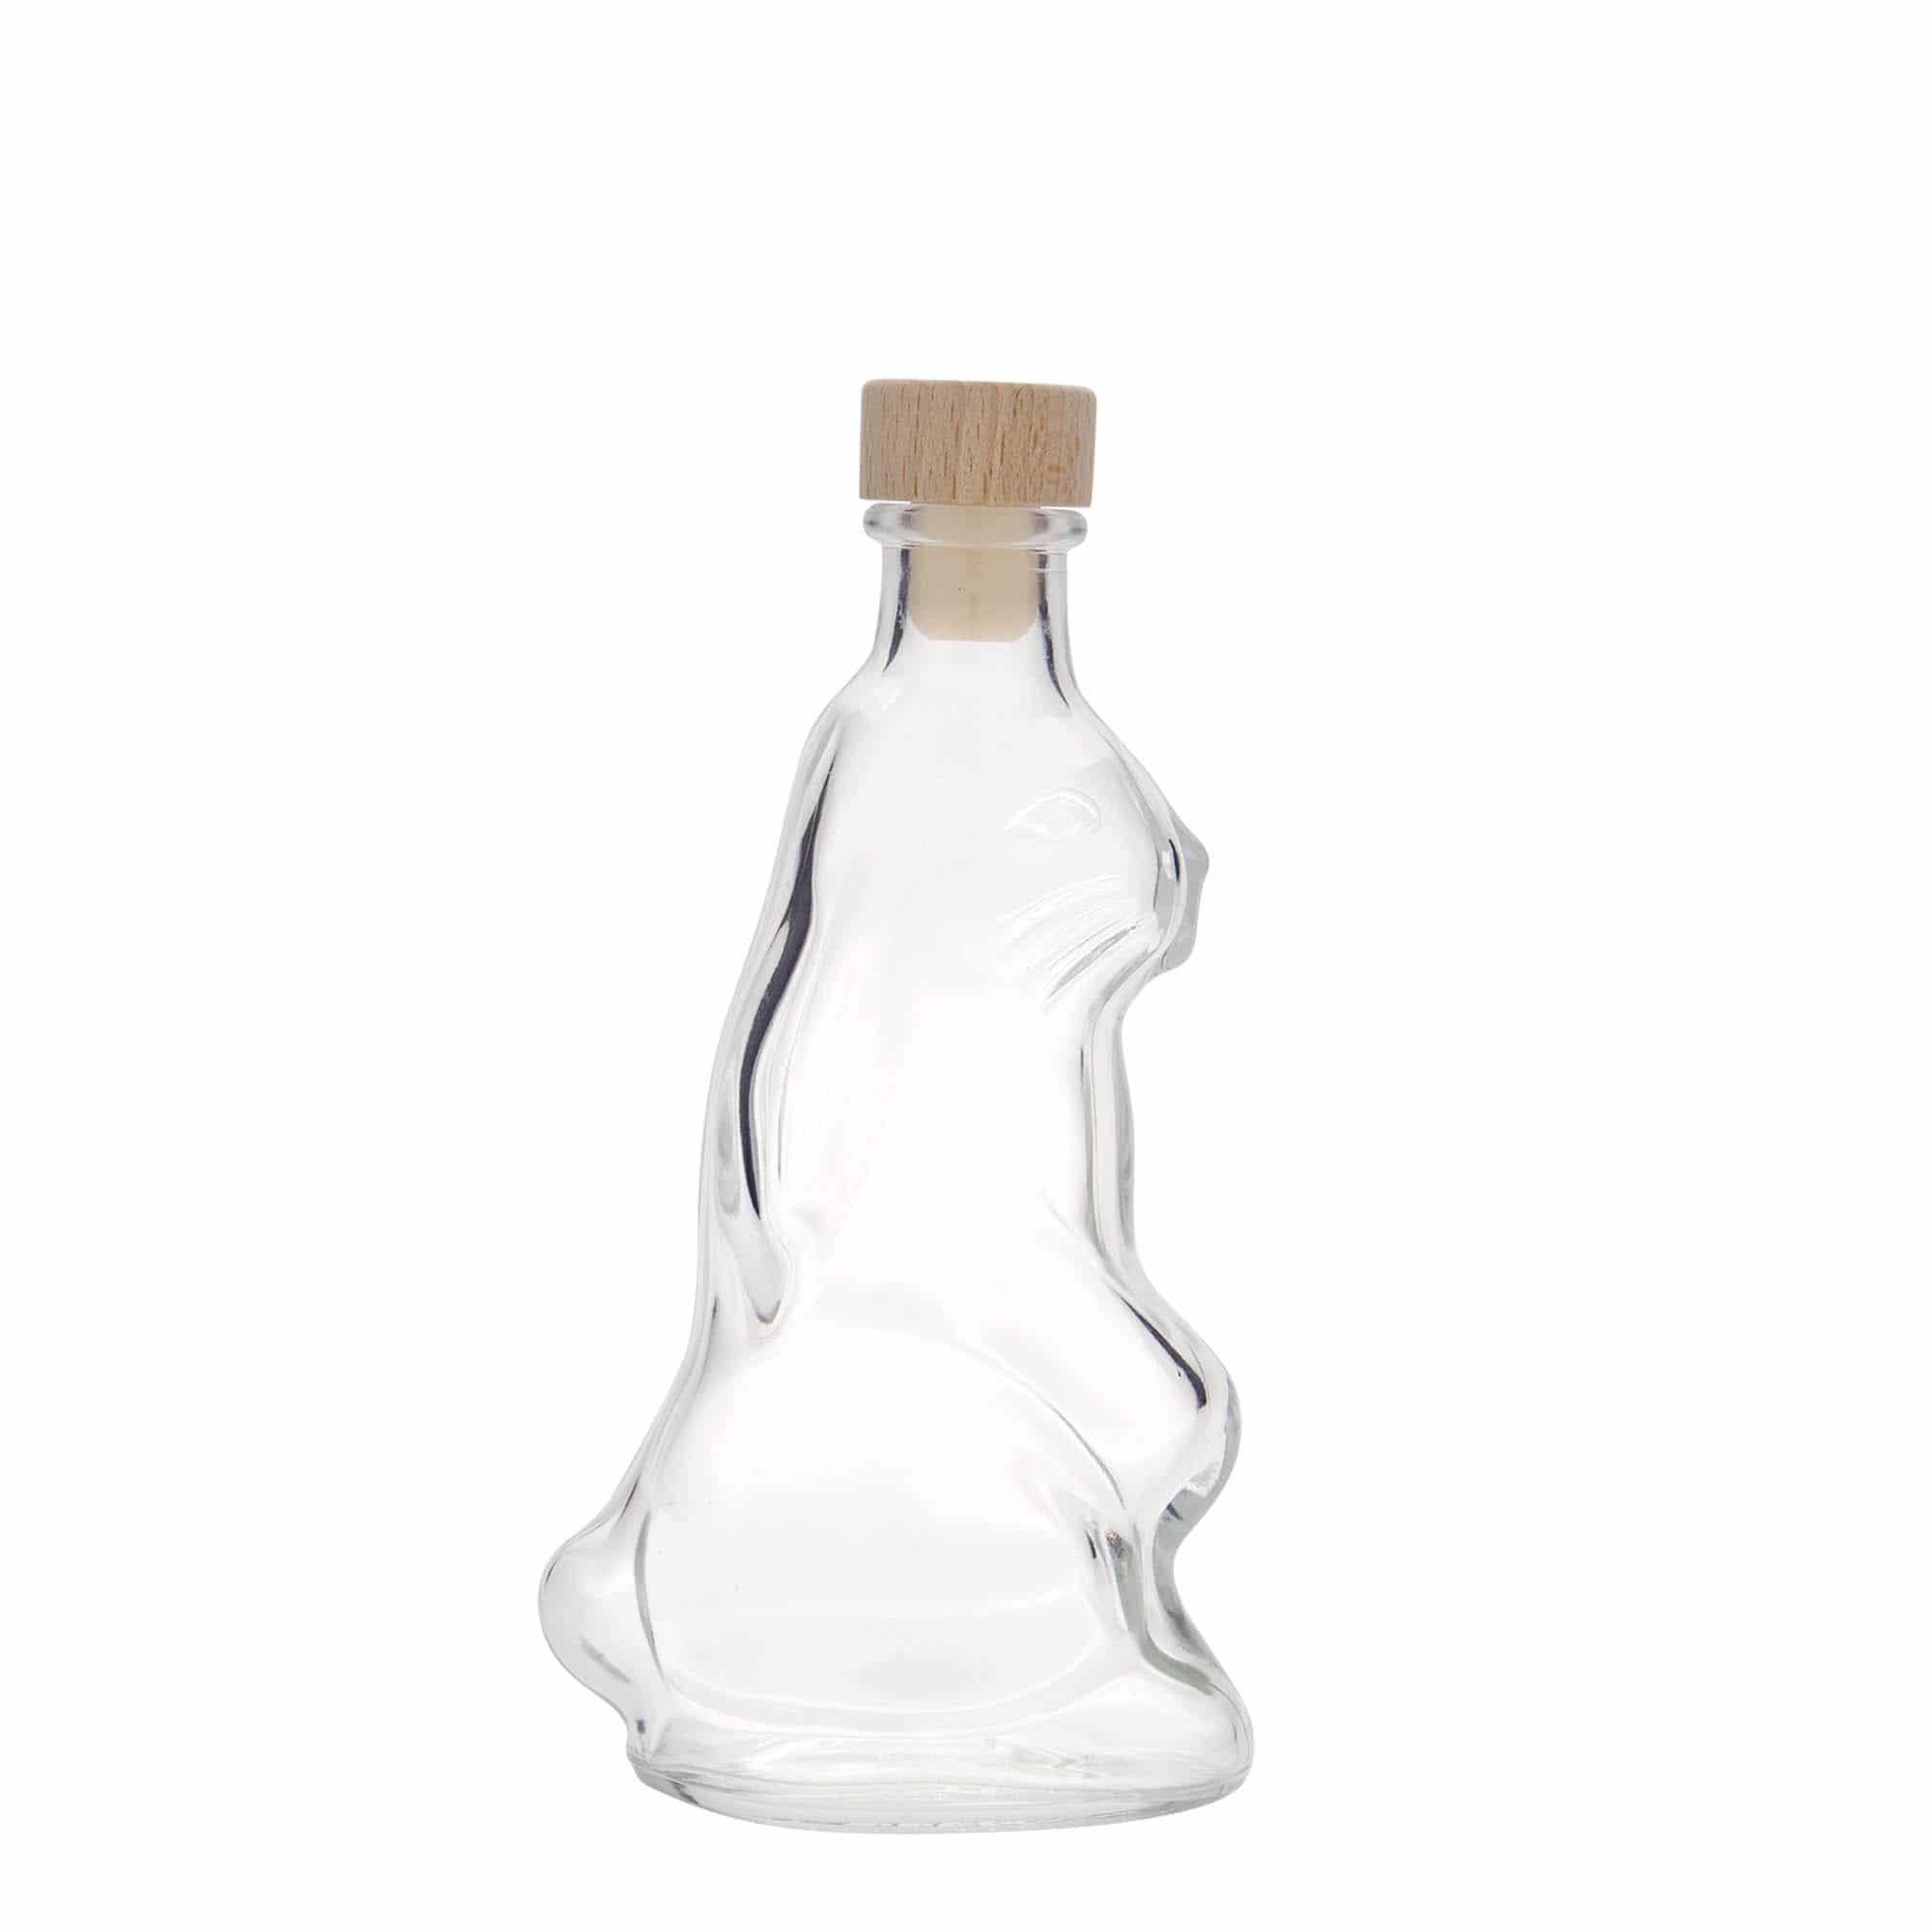 200 ml glass bottle 'Hare', closure: cork